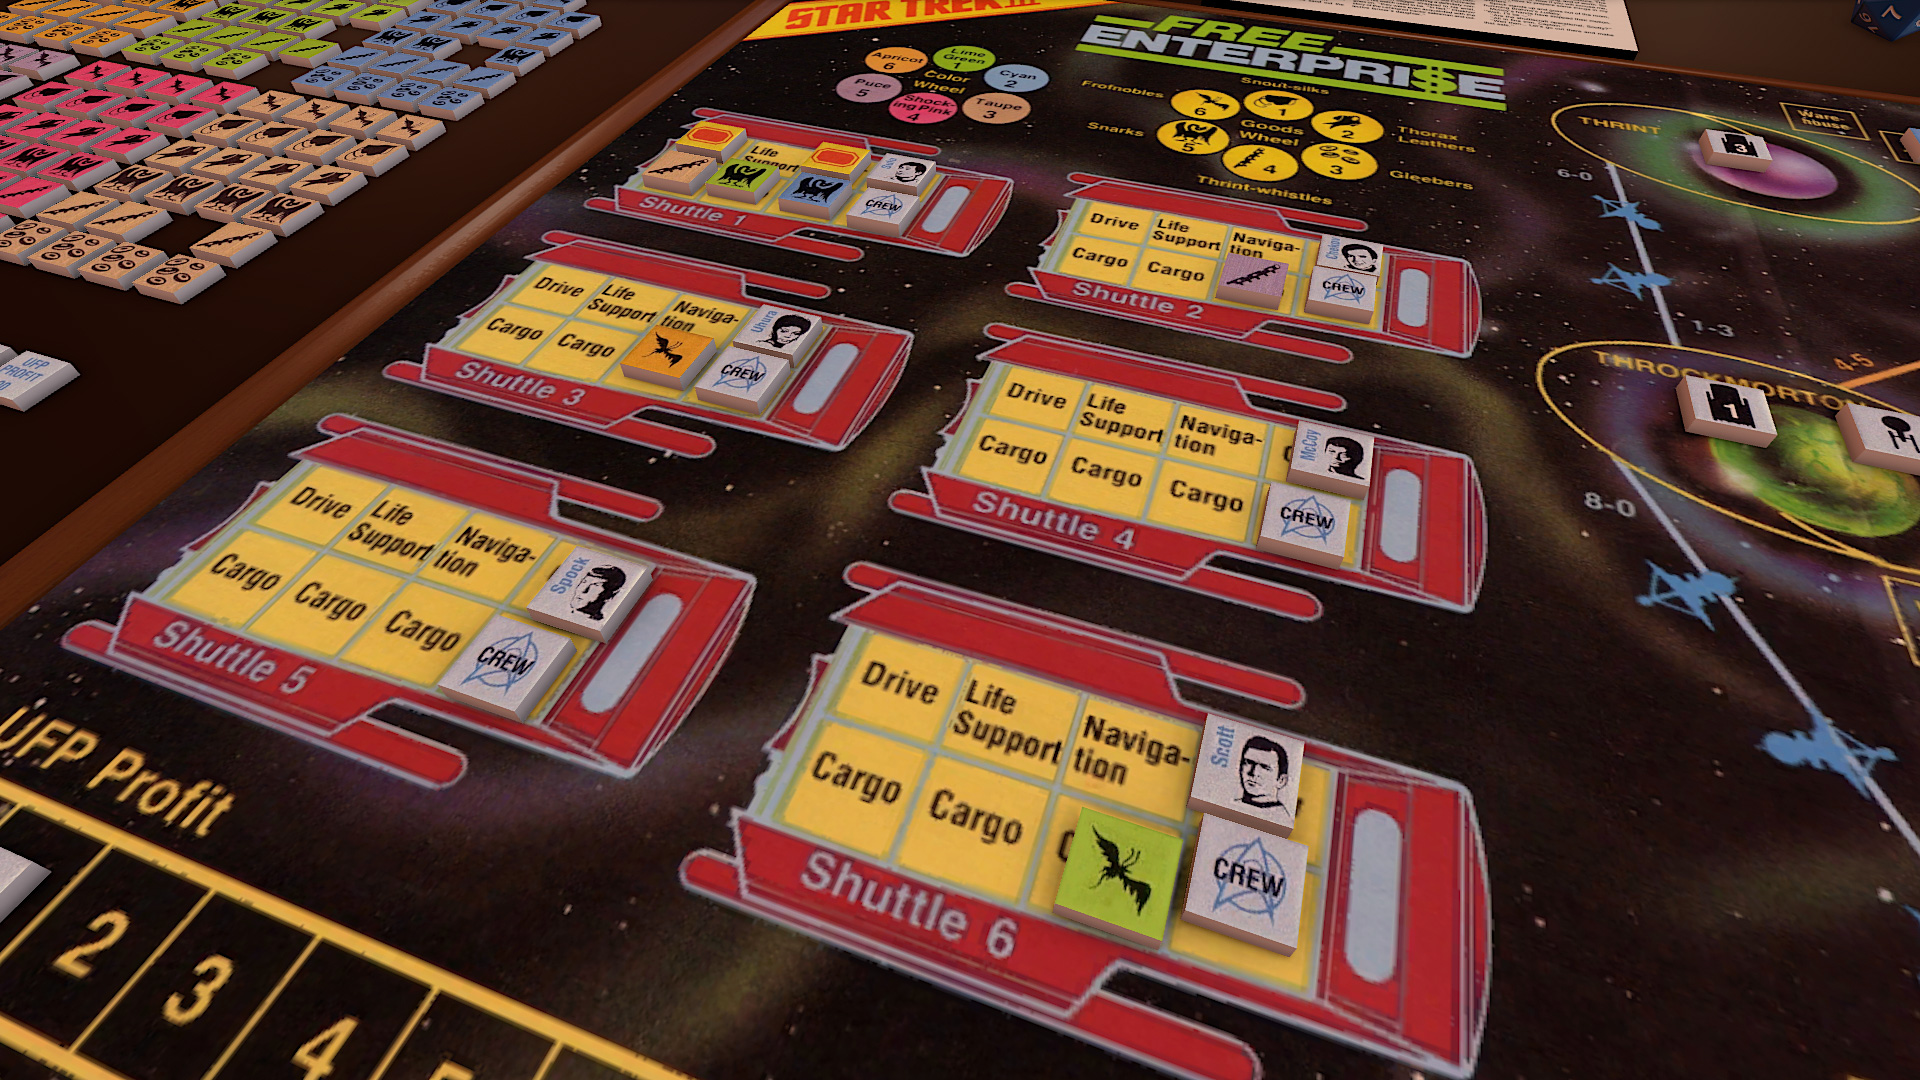 Star Trek: Free Enterprise Board Game